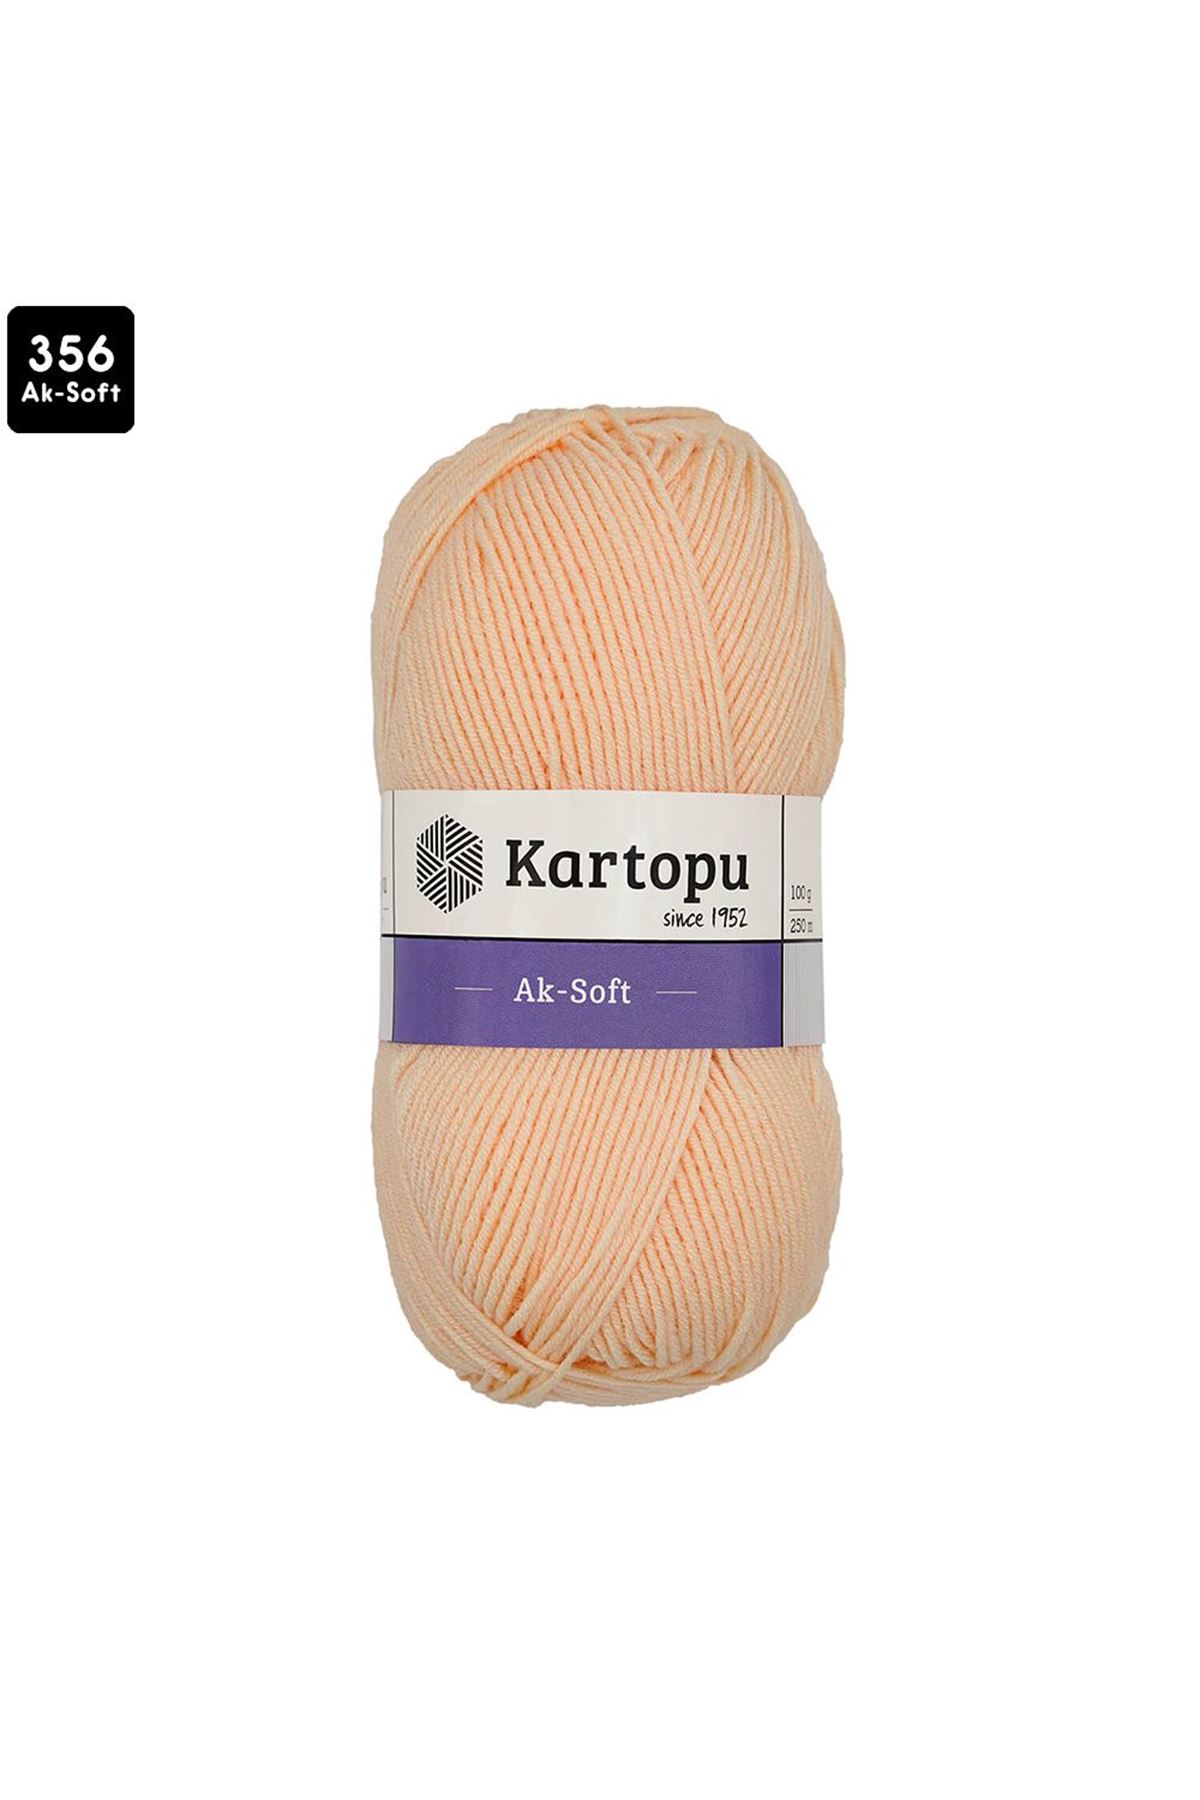 Kartopu Ak-Soft Renk No:356